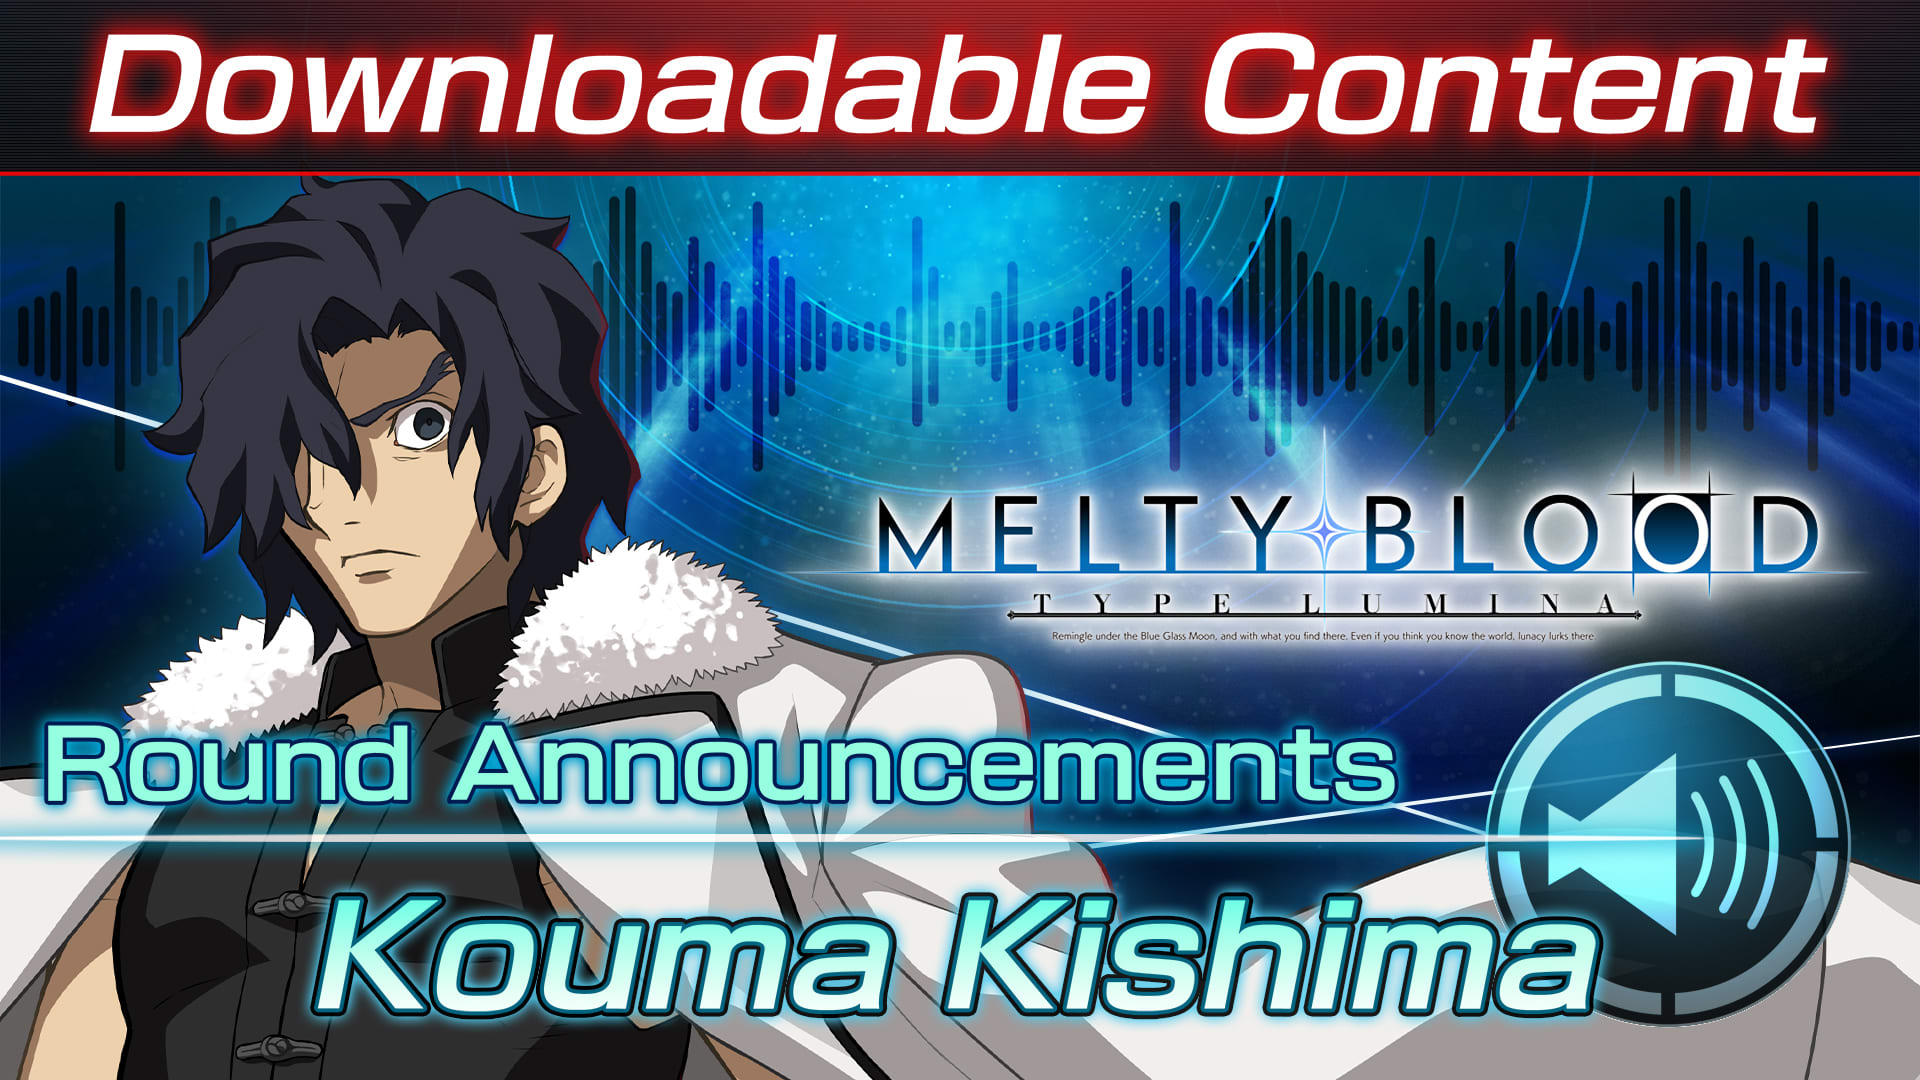 Contenido adicional: "Kouma Kishima Round Announcements"